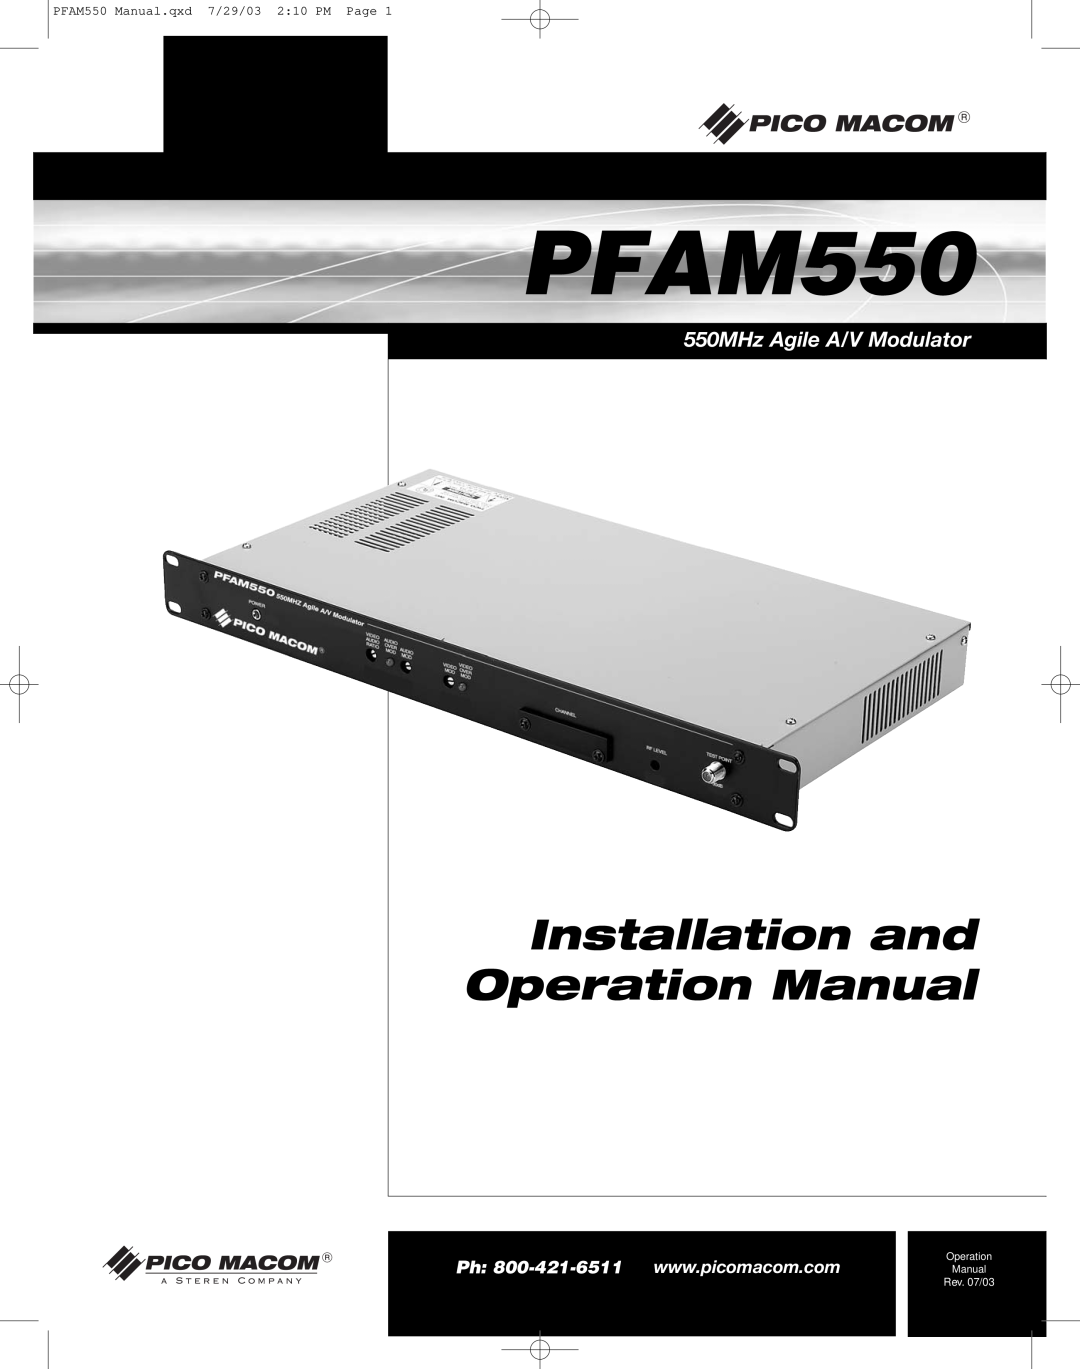 Pico Macom operation manual 550MHz Agile A/V Modulator, PFAM550 Manual.qxd 7/29/03 2:10 PM Page, Rev. 07/03, Operation 